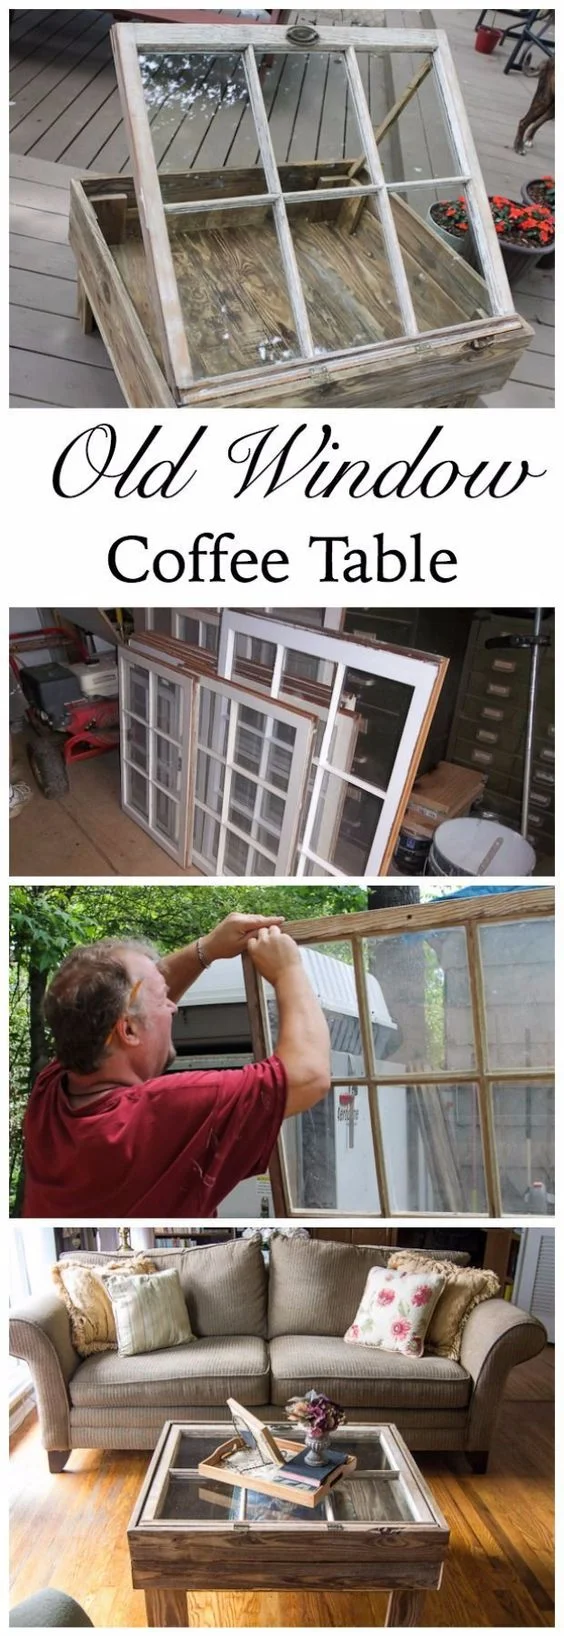 old window coffee table design